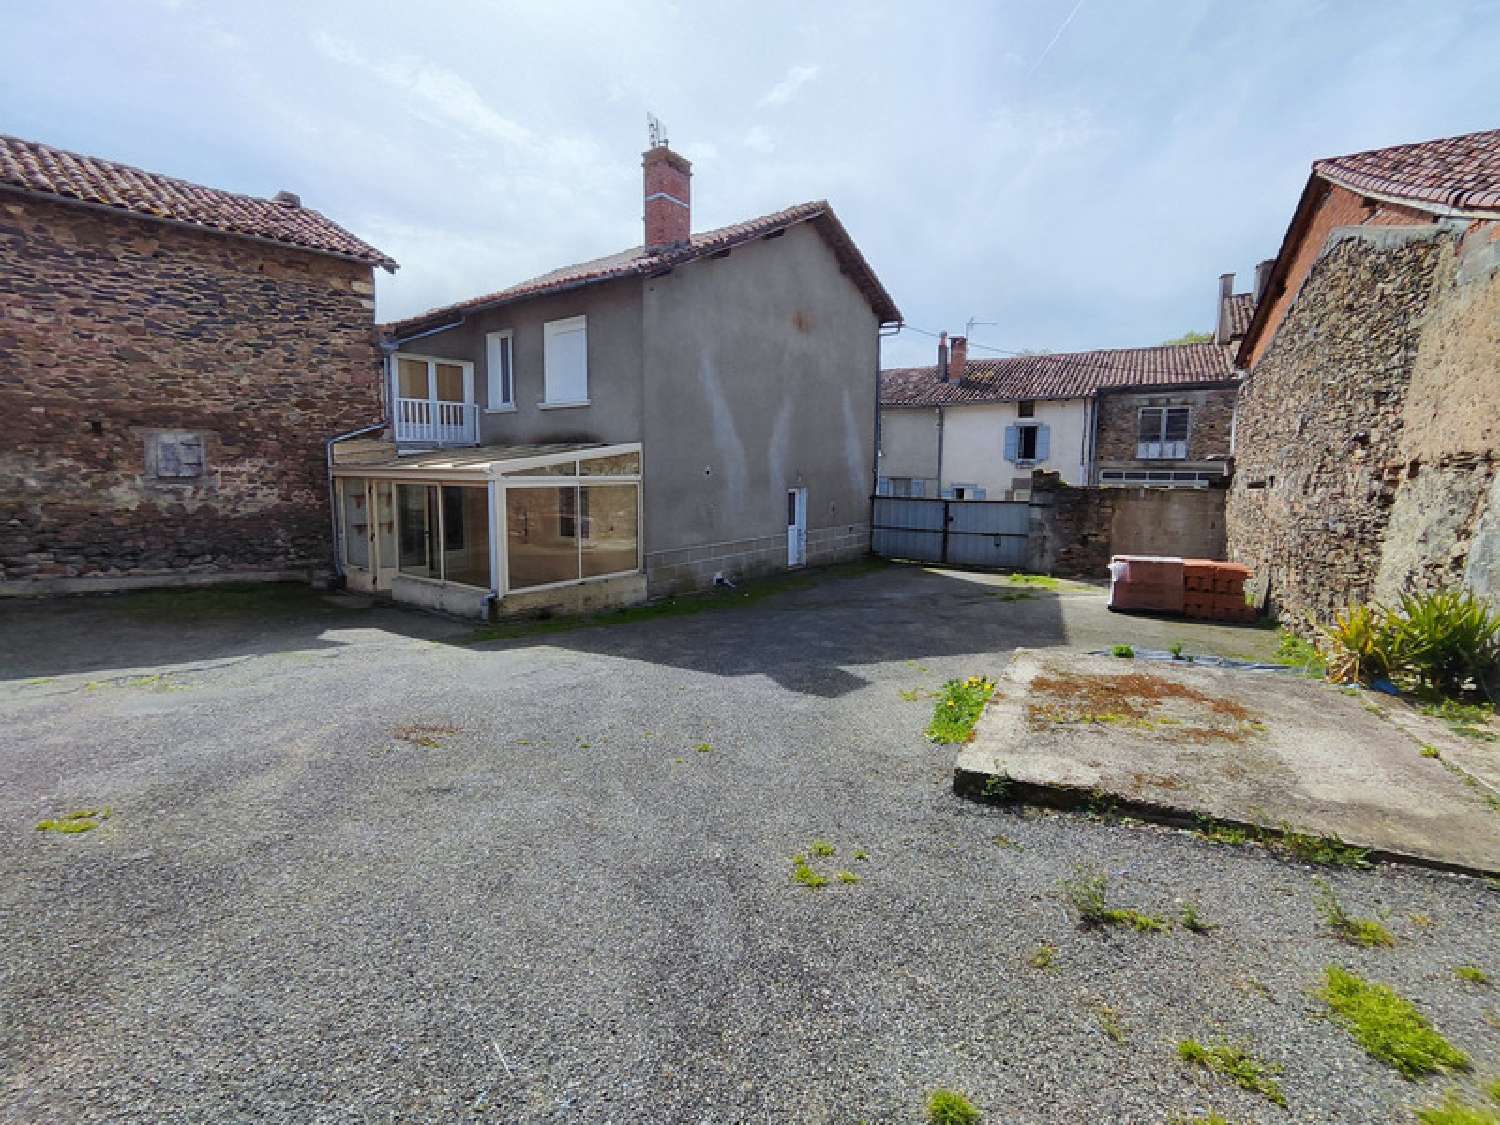  for sale house Saulgond Charente 2